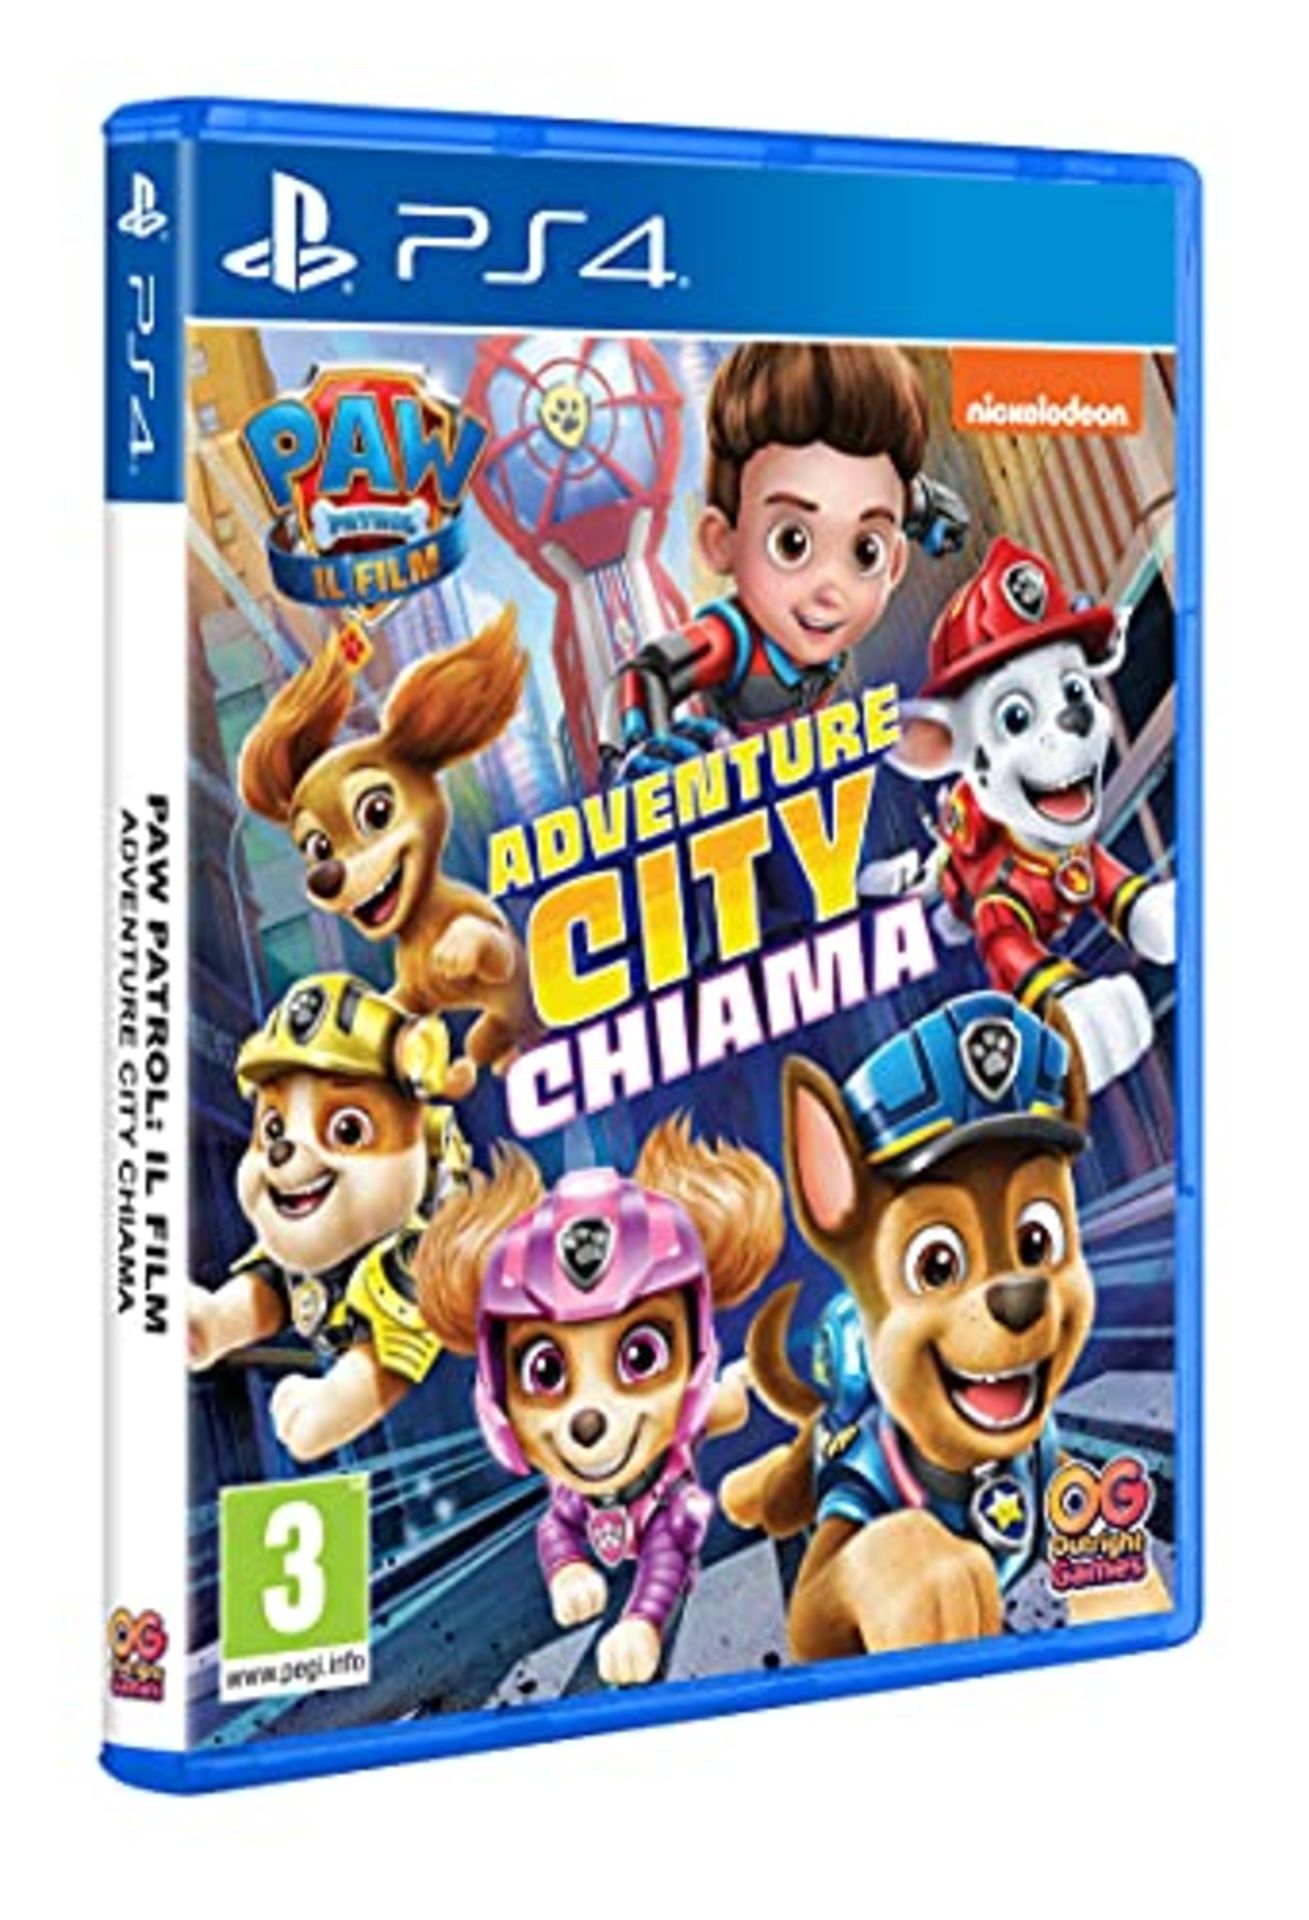 Paw Patrol. Il Film Adventure City Chiama - Playstation 4